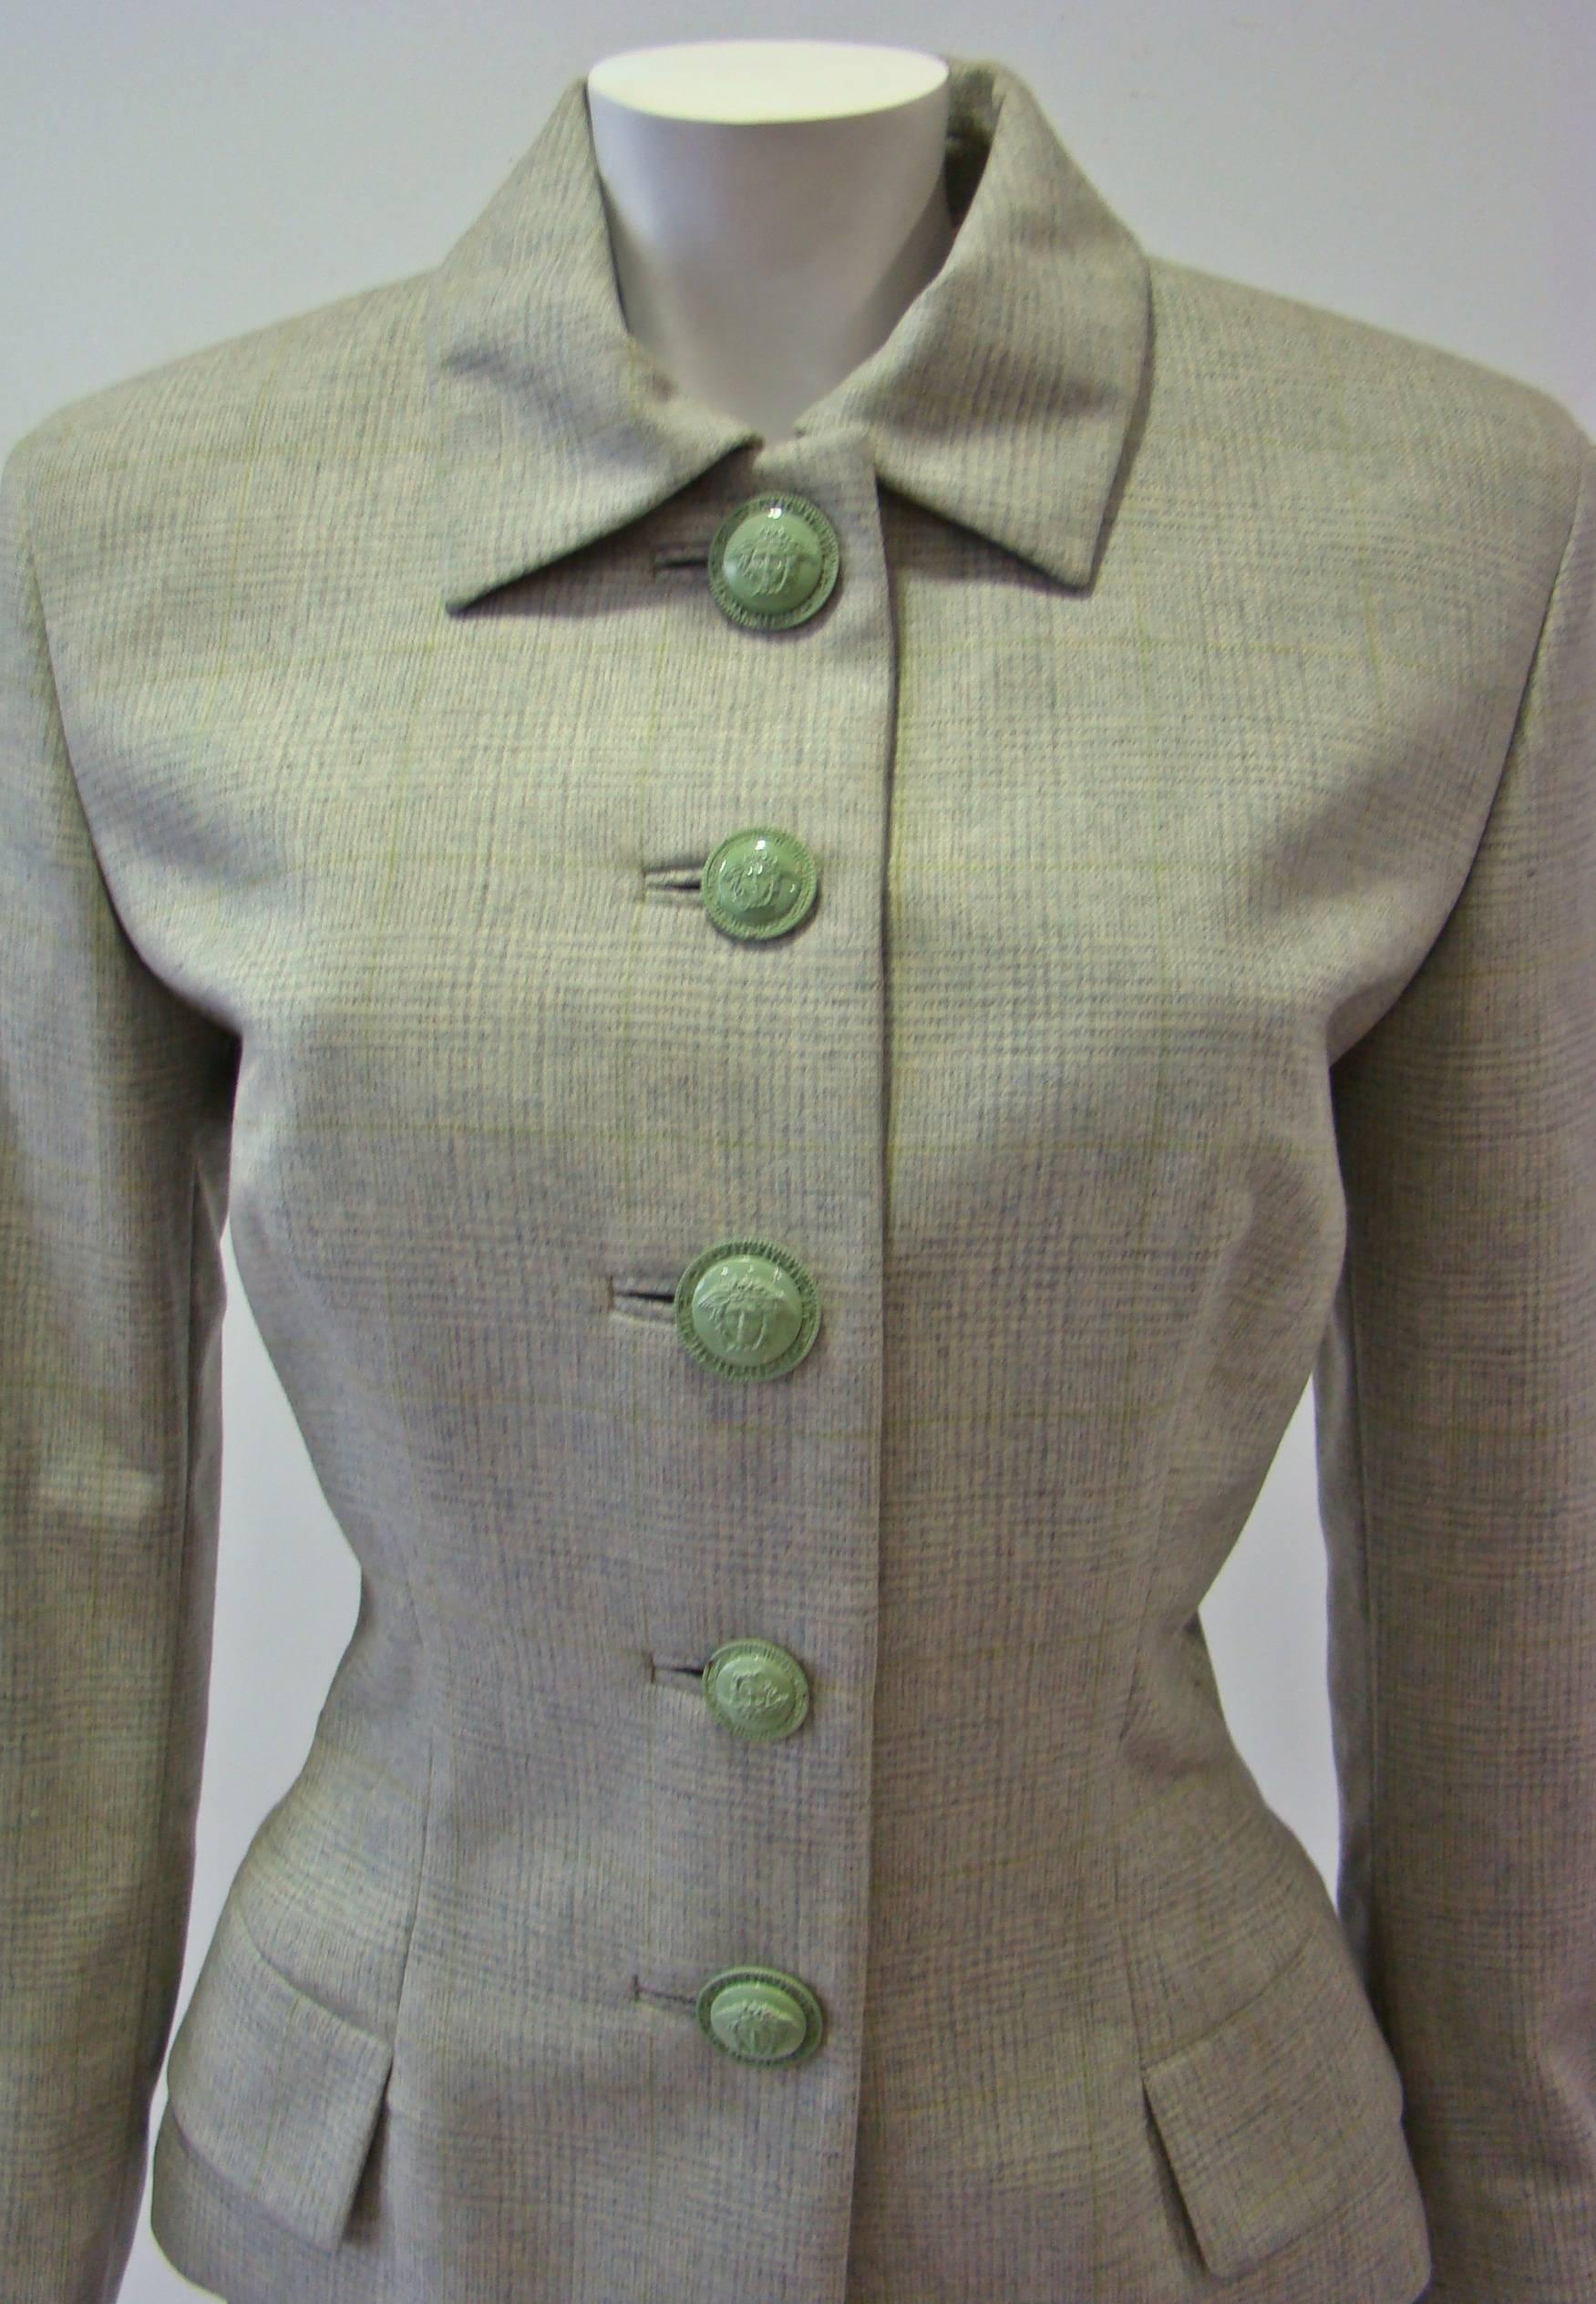 Gray Gianni Versace Mint Green Prens De Gal Wool Pants Suit For Sale